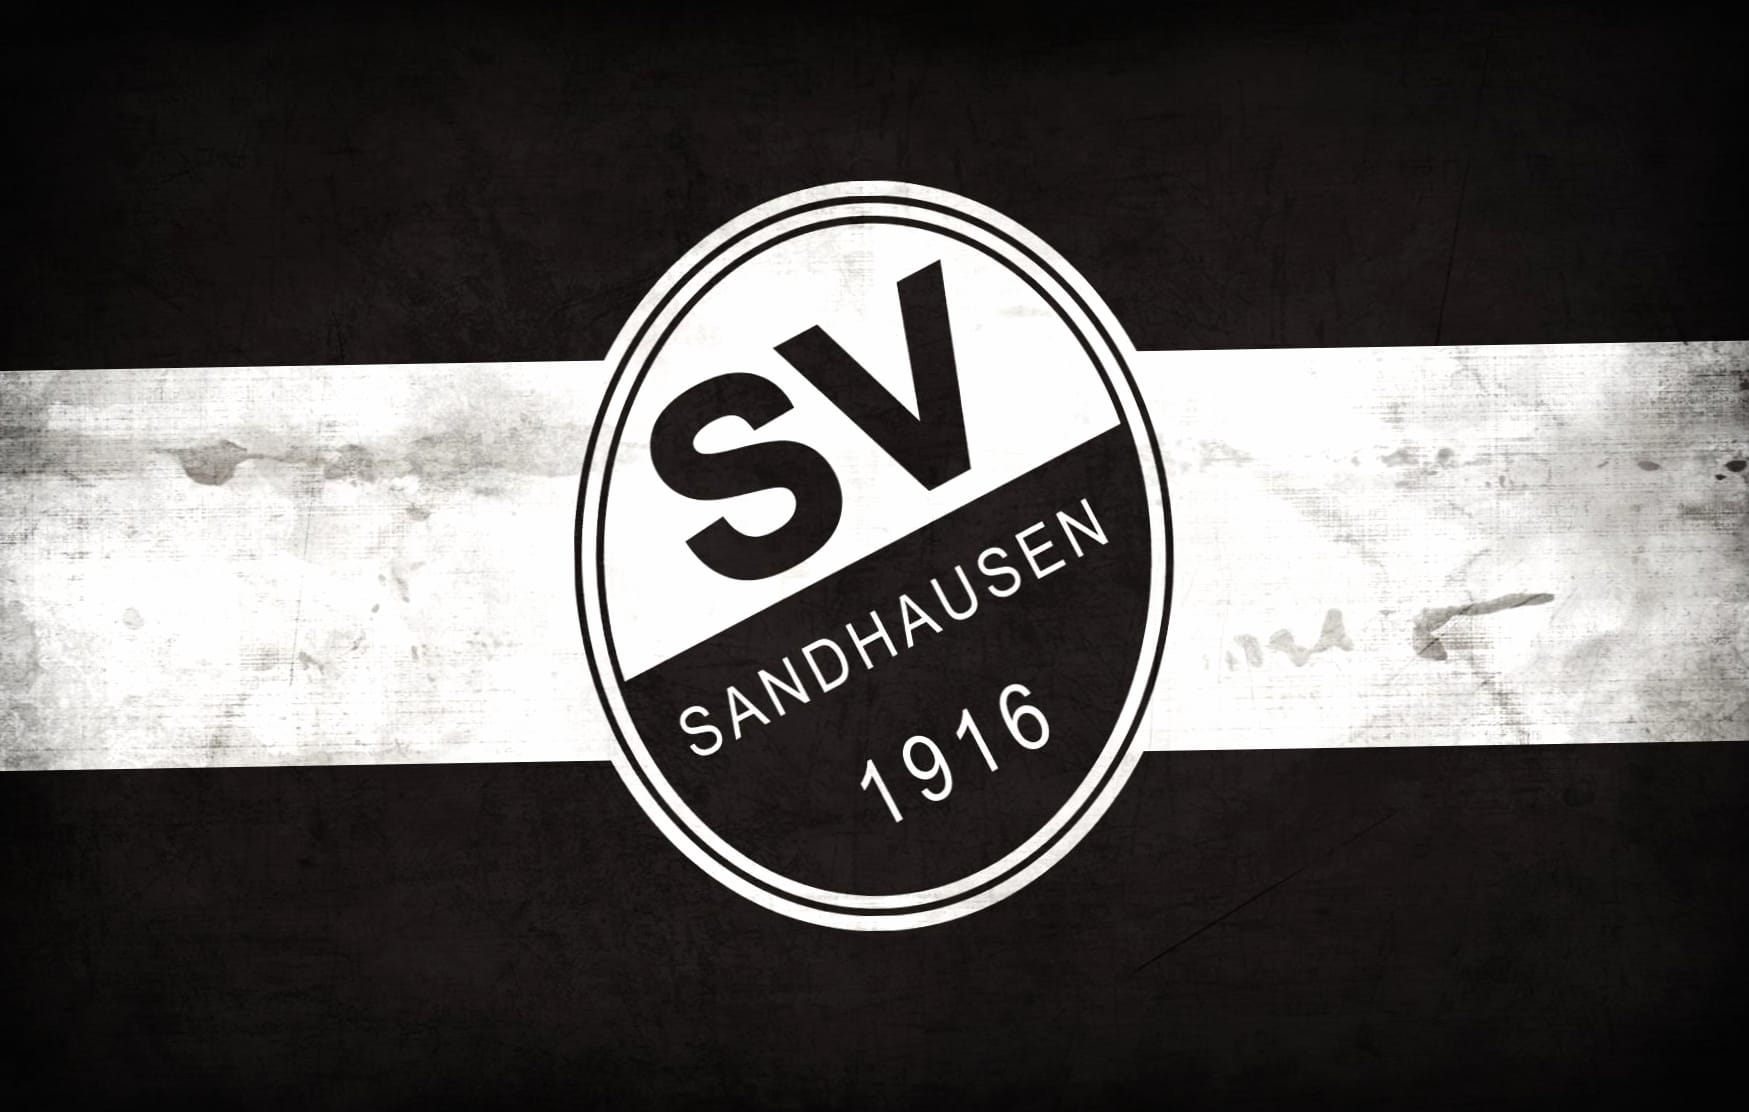 SV Sandhausen at 1024 x 1024 iPad size wallpapers HD quality